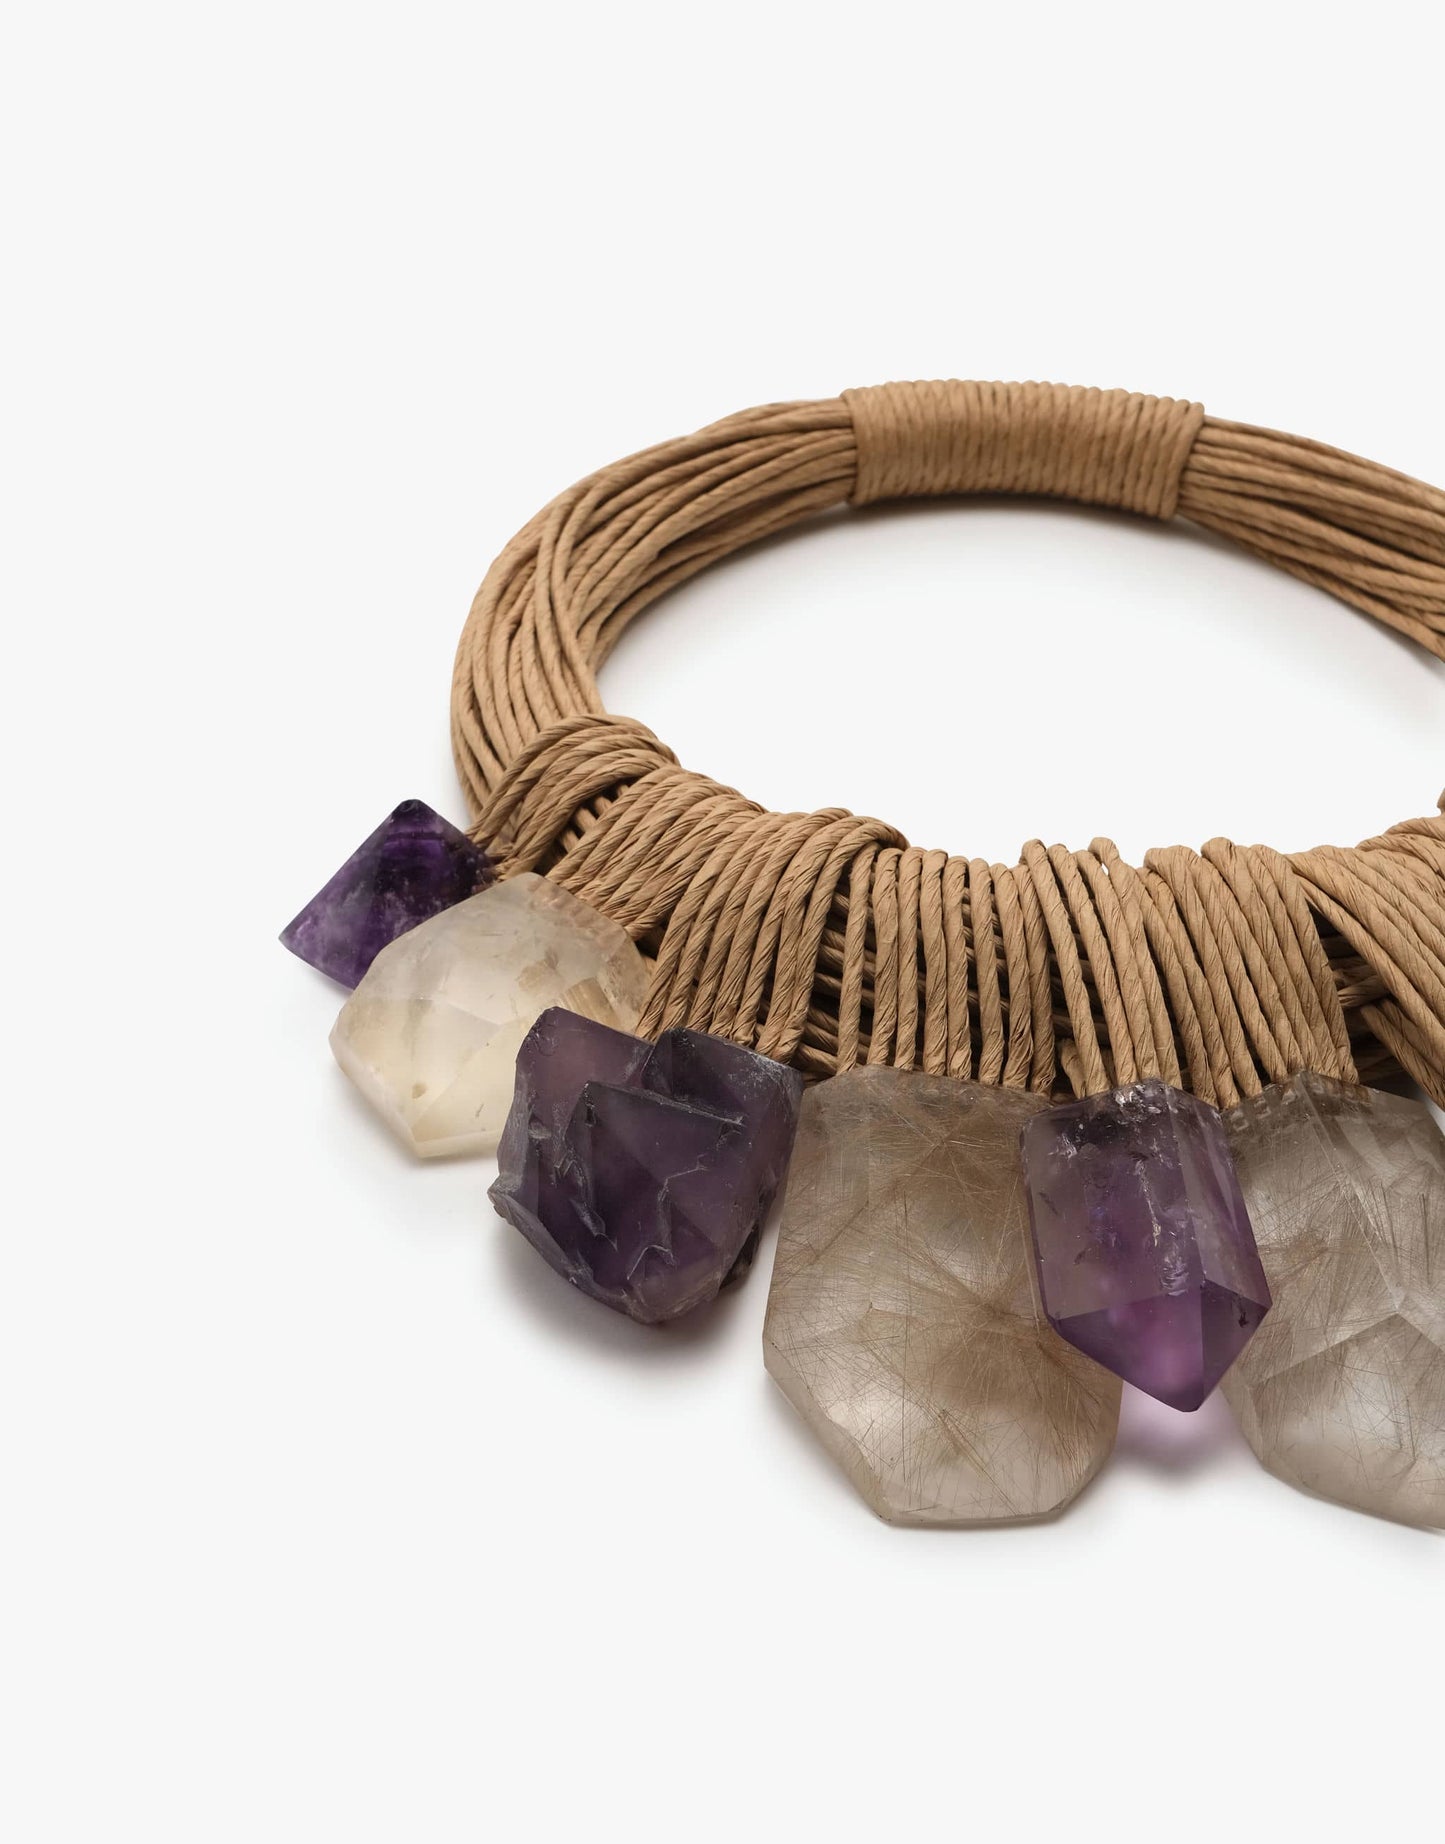 50th anniversary necklace: amethyst, crystal, quartz